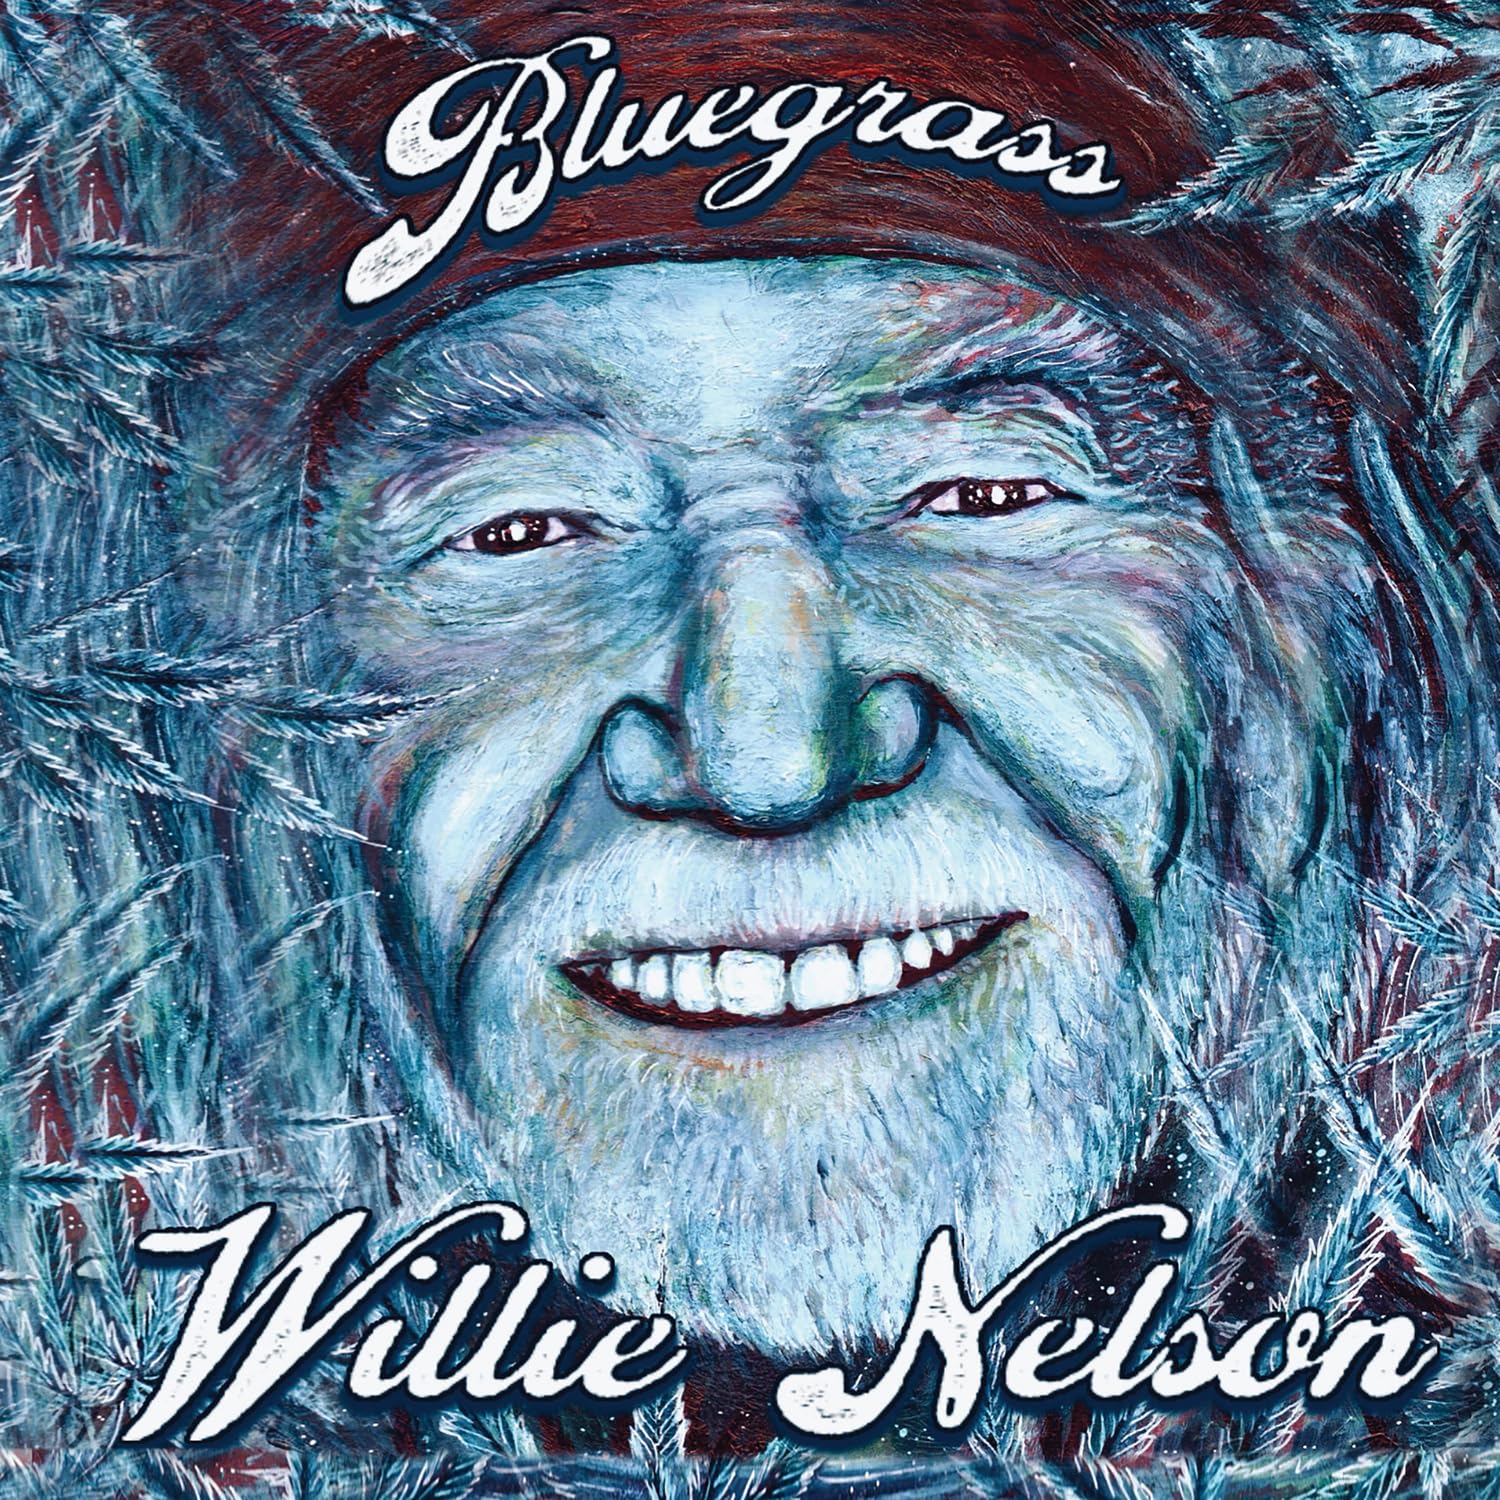 WILLIE NELSON - Bluegrass cover 